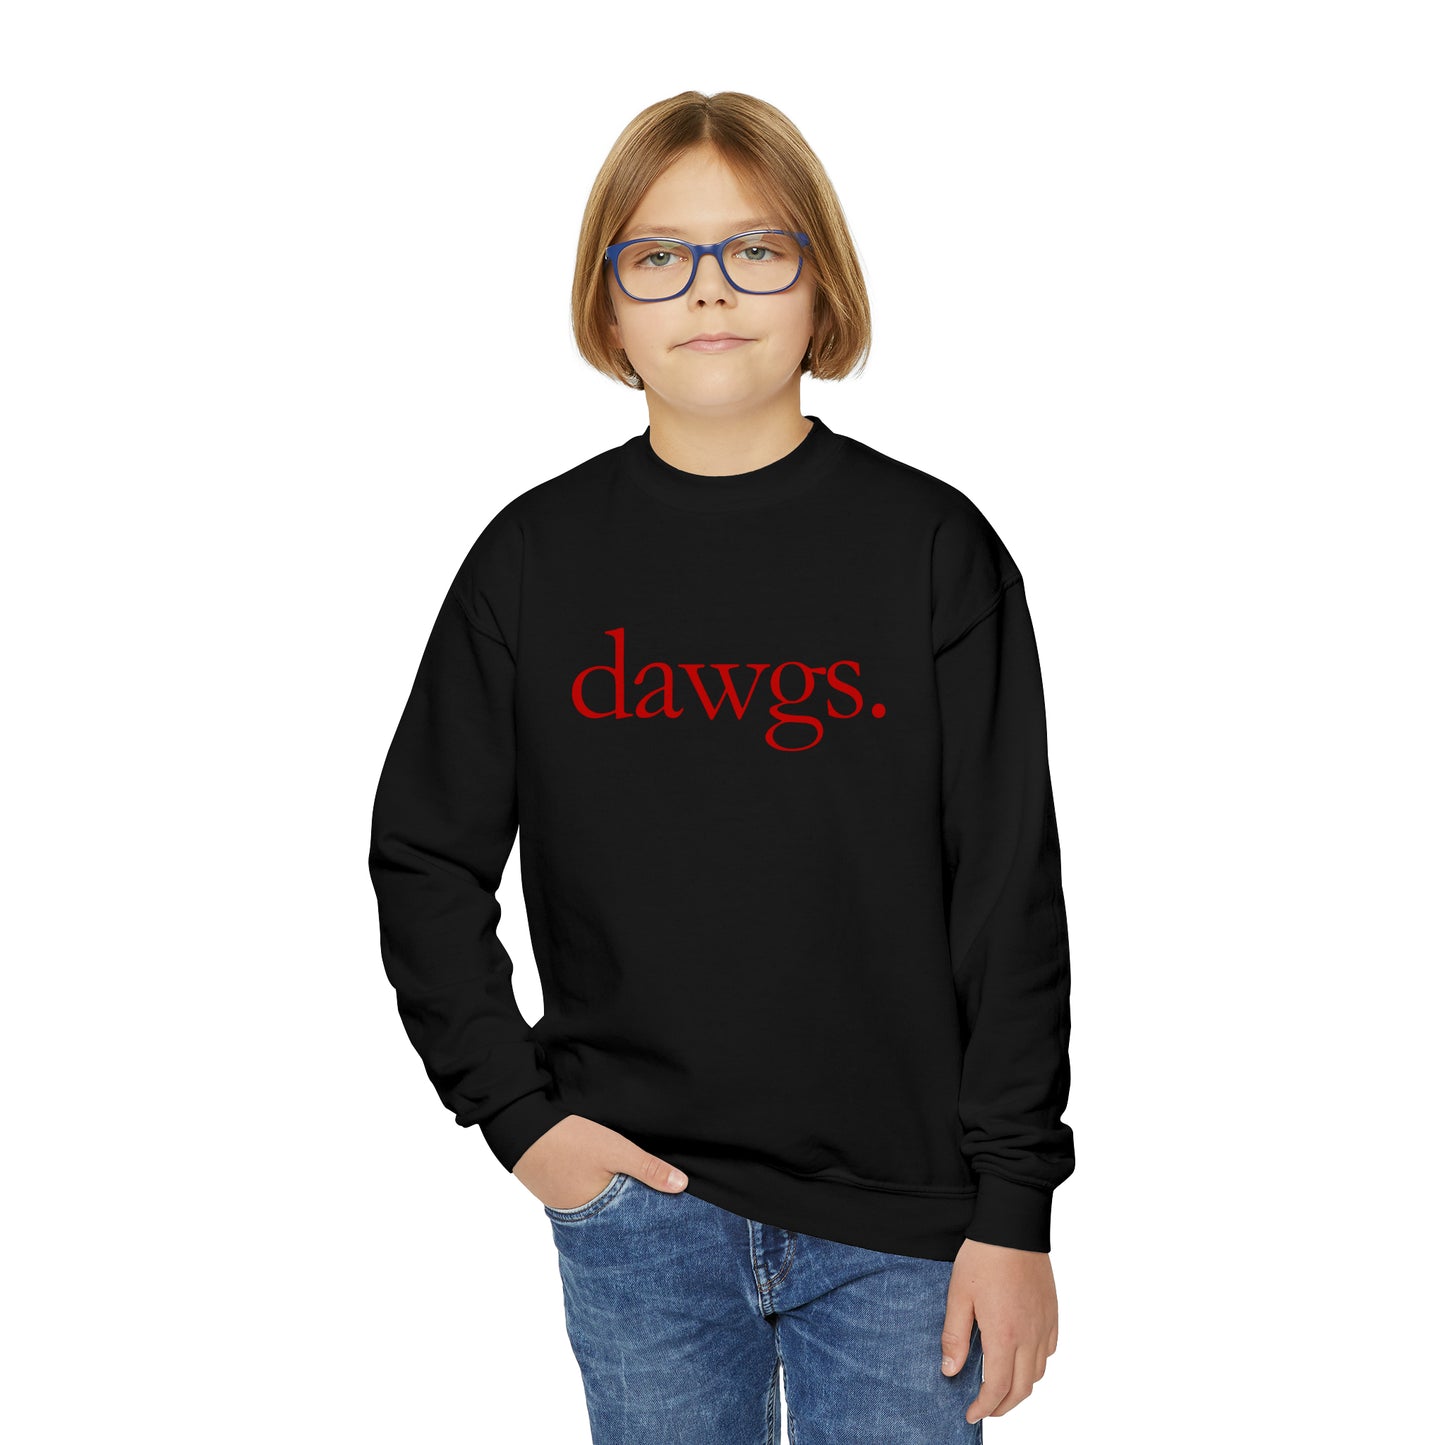 Georgia Youth "Dawgs" Sweatshirt